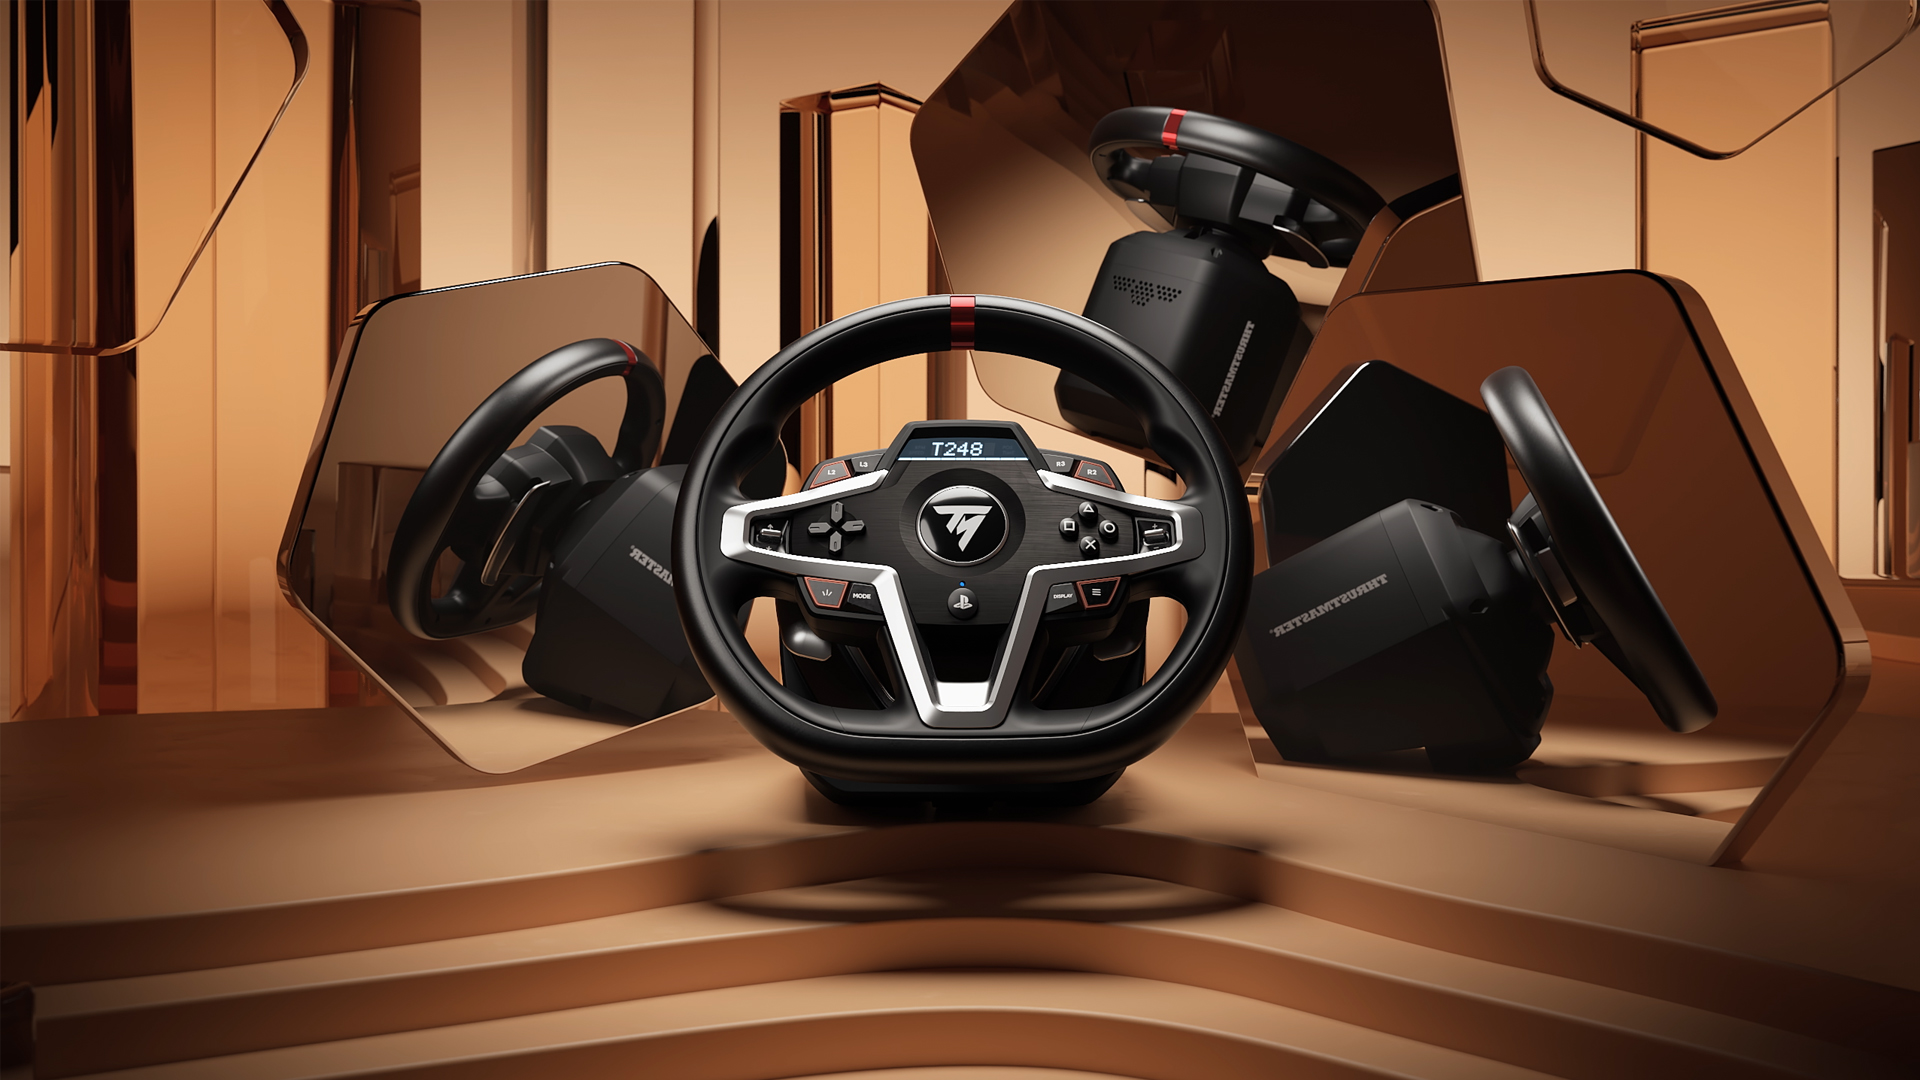 Thrustmaster T248 steering wheel & pedals reviewed · RaceFans